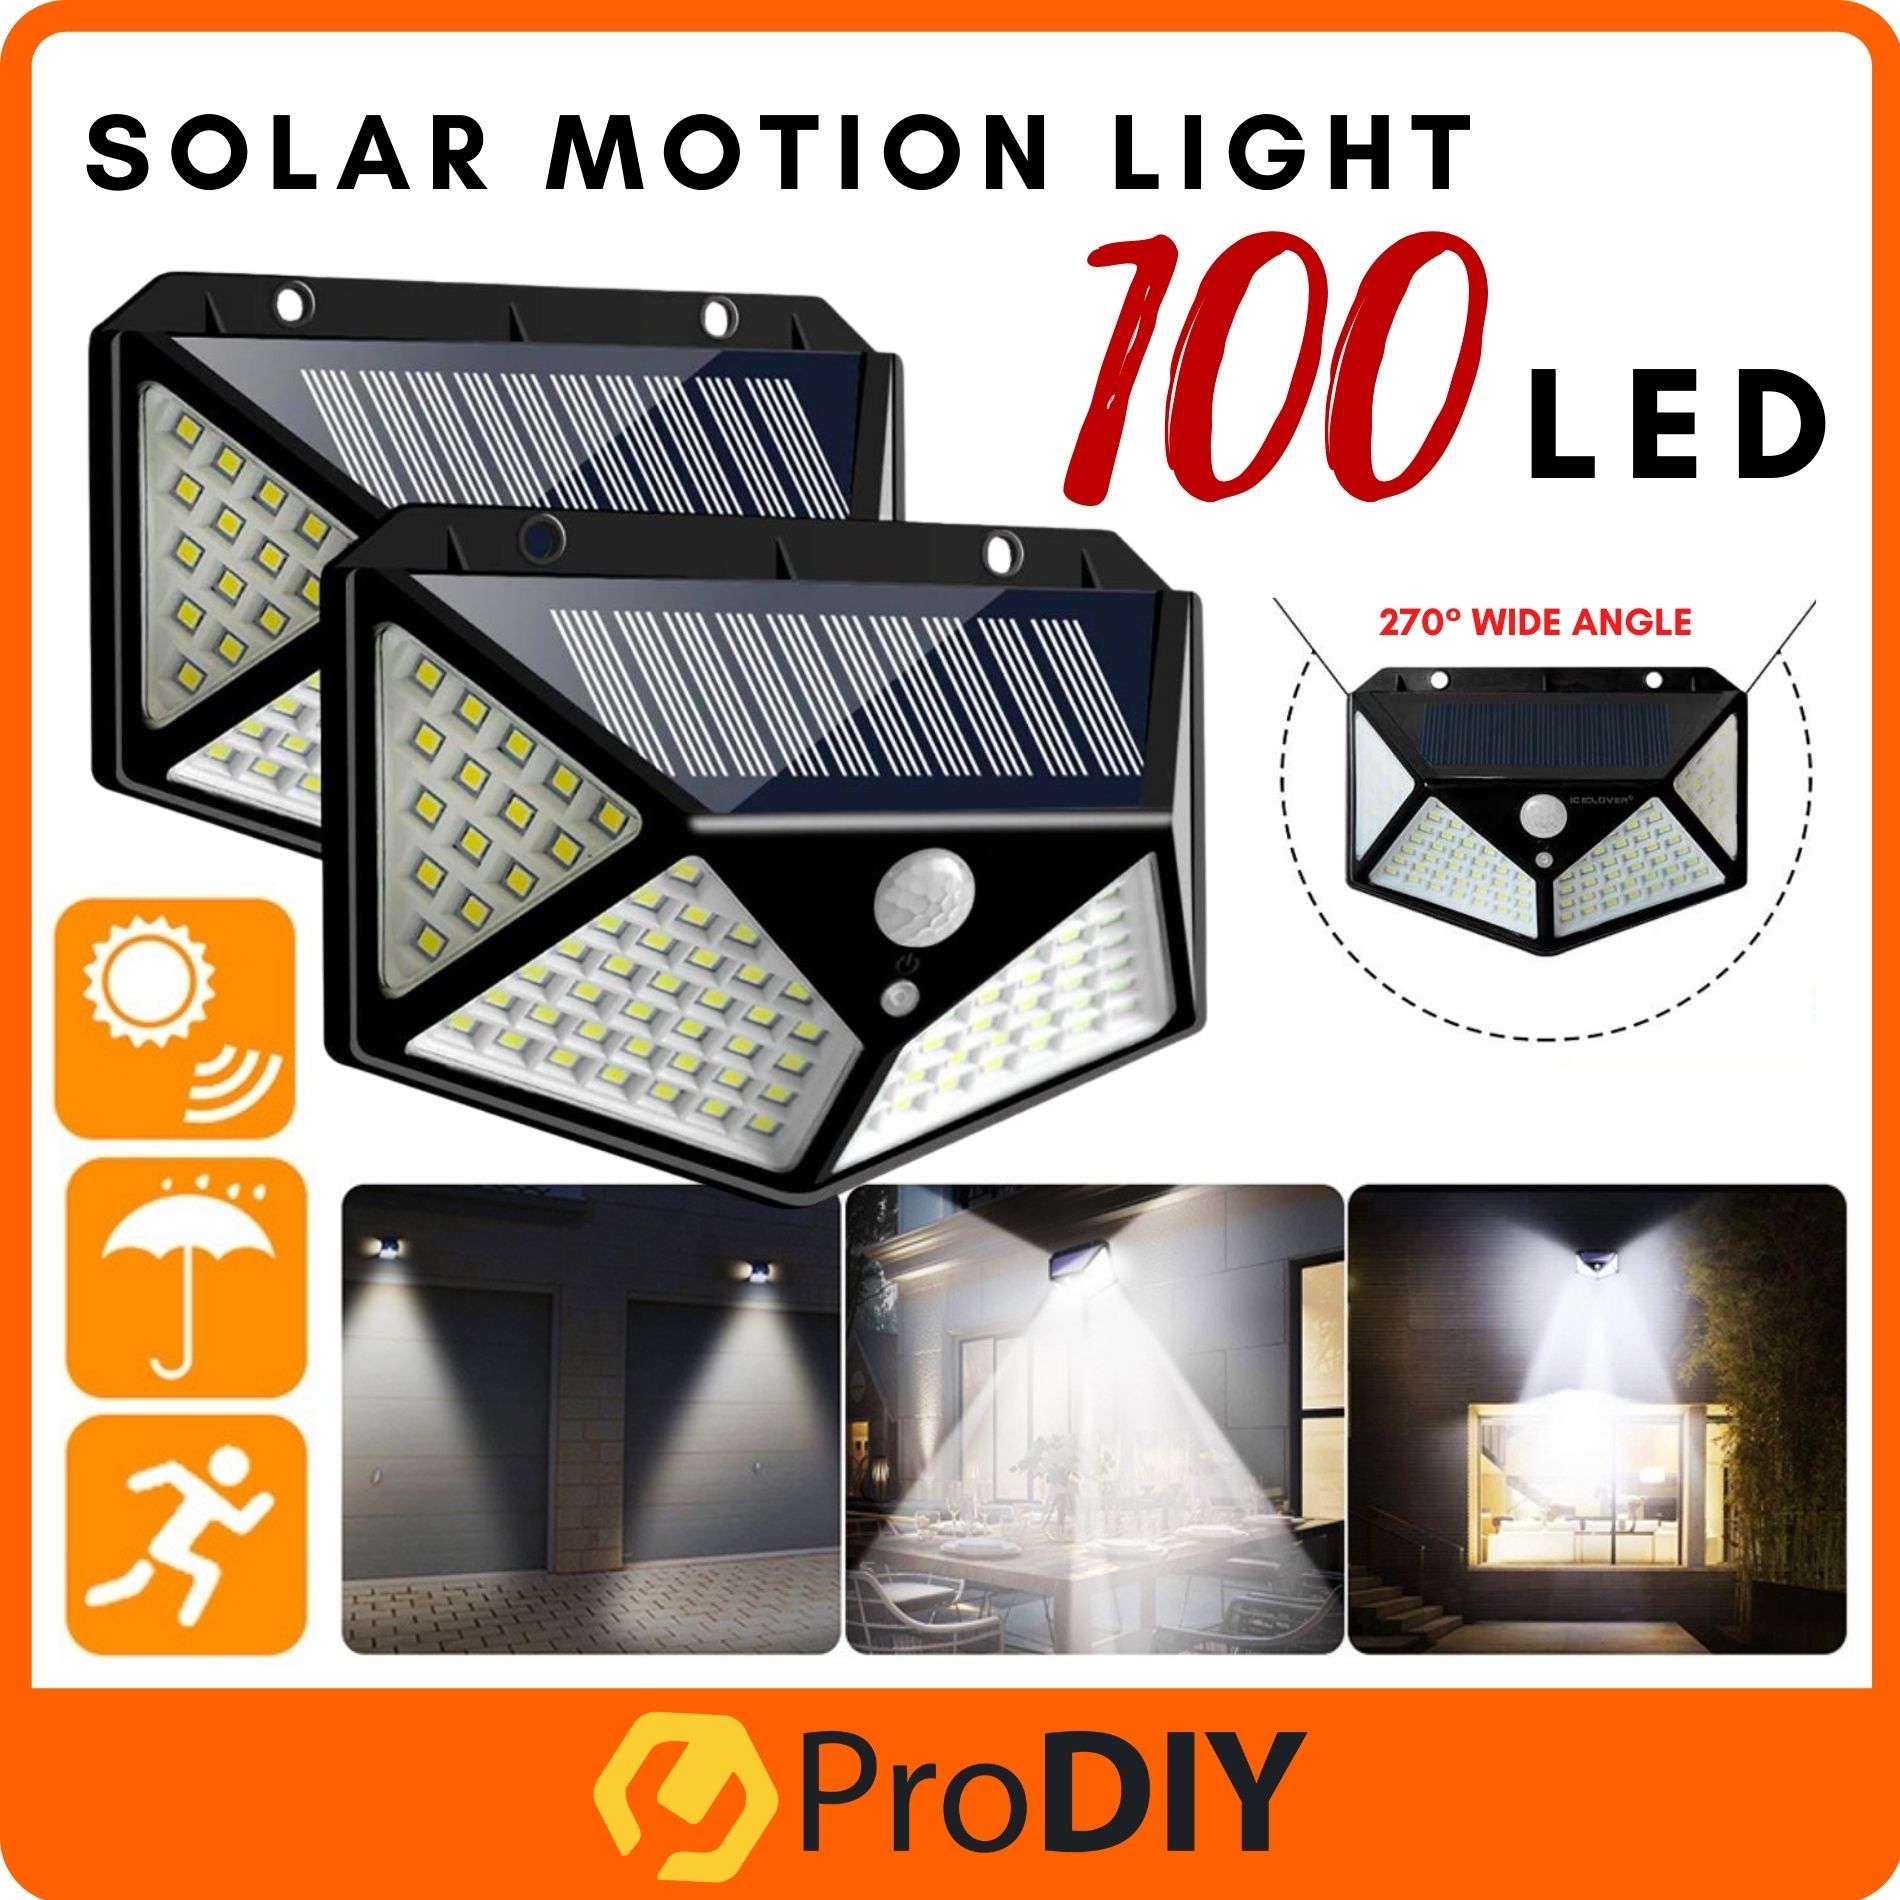 CL-100 LED Solar Outdoor Light PIR Motion Sensor IP65 Waterproof Wall Mount Garden Night Safety Lighting